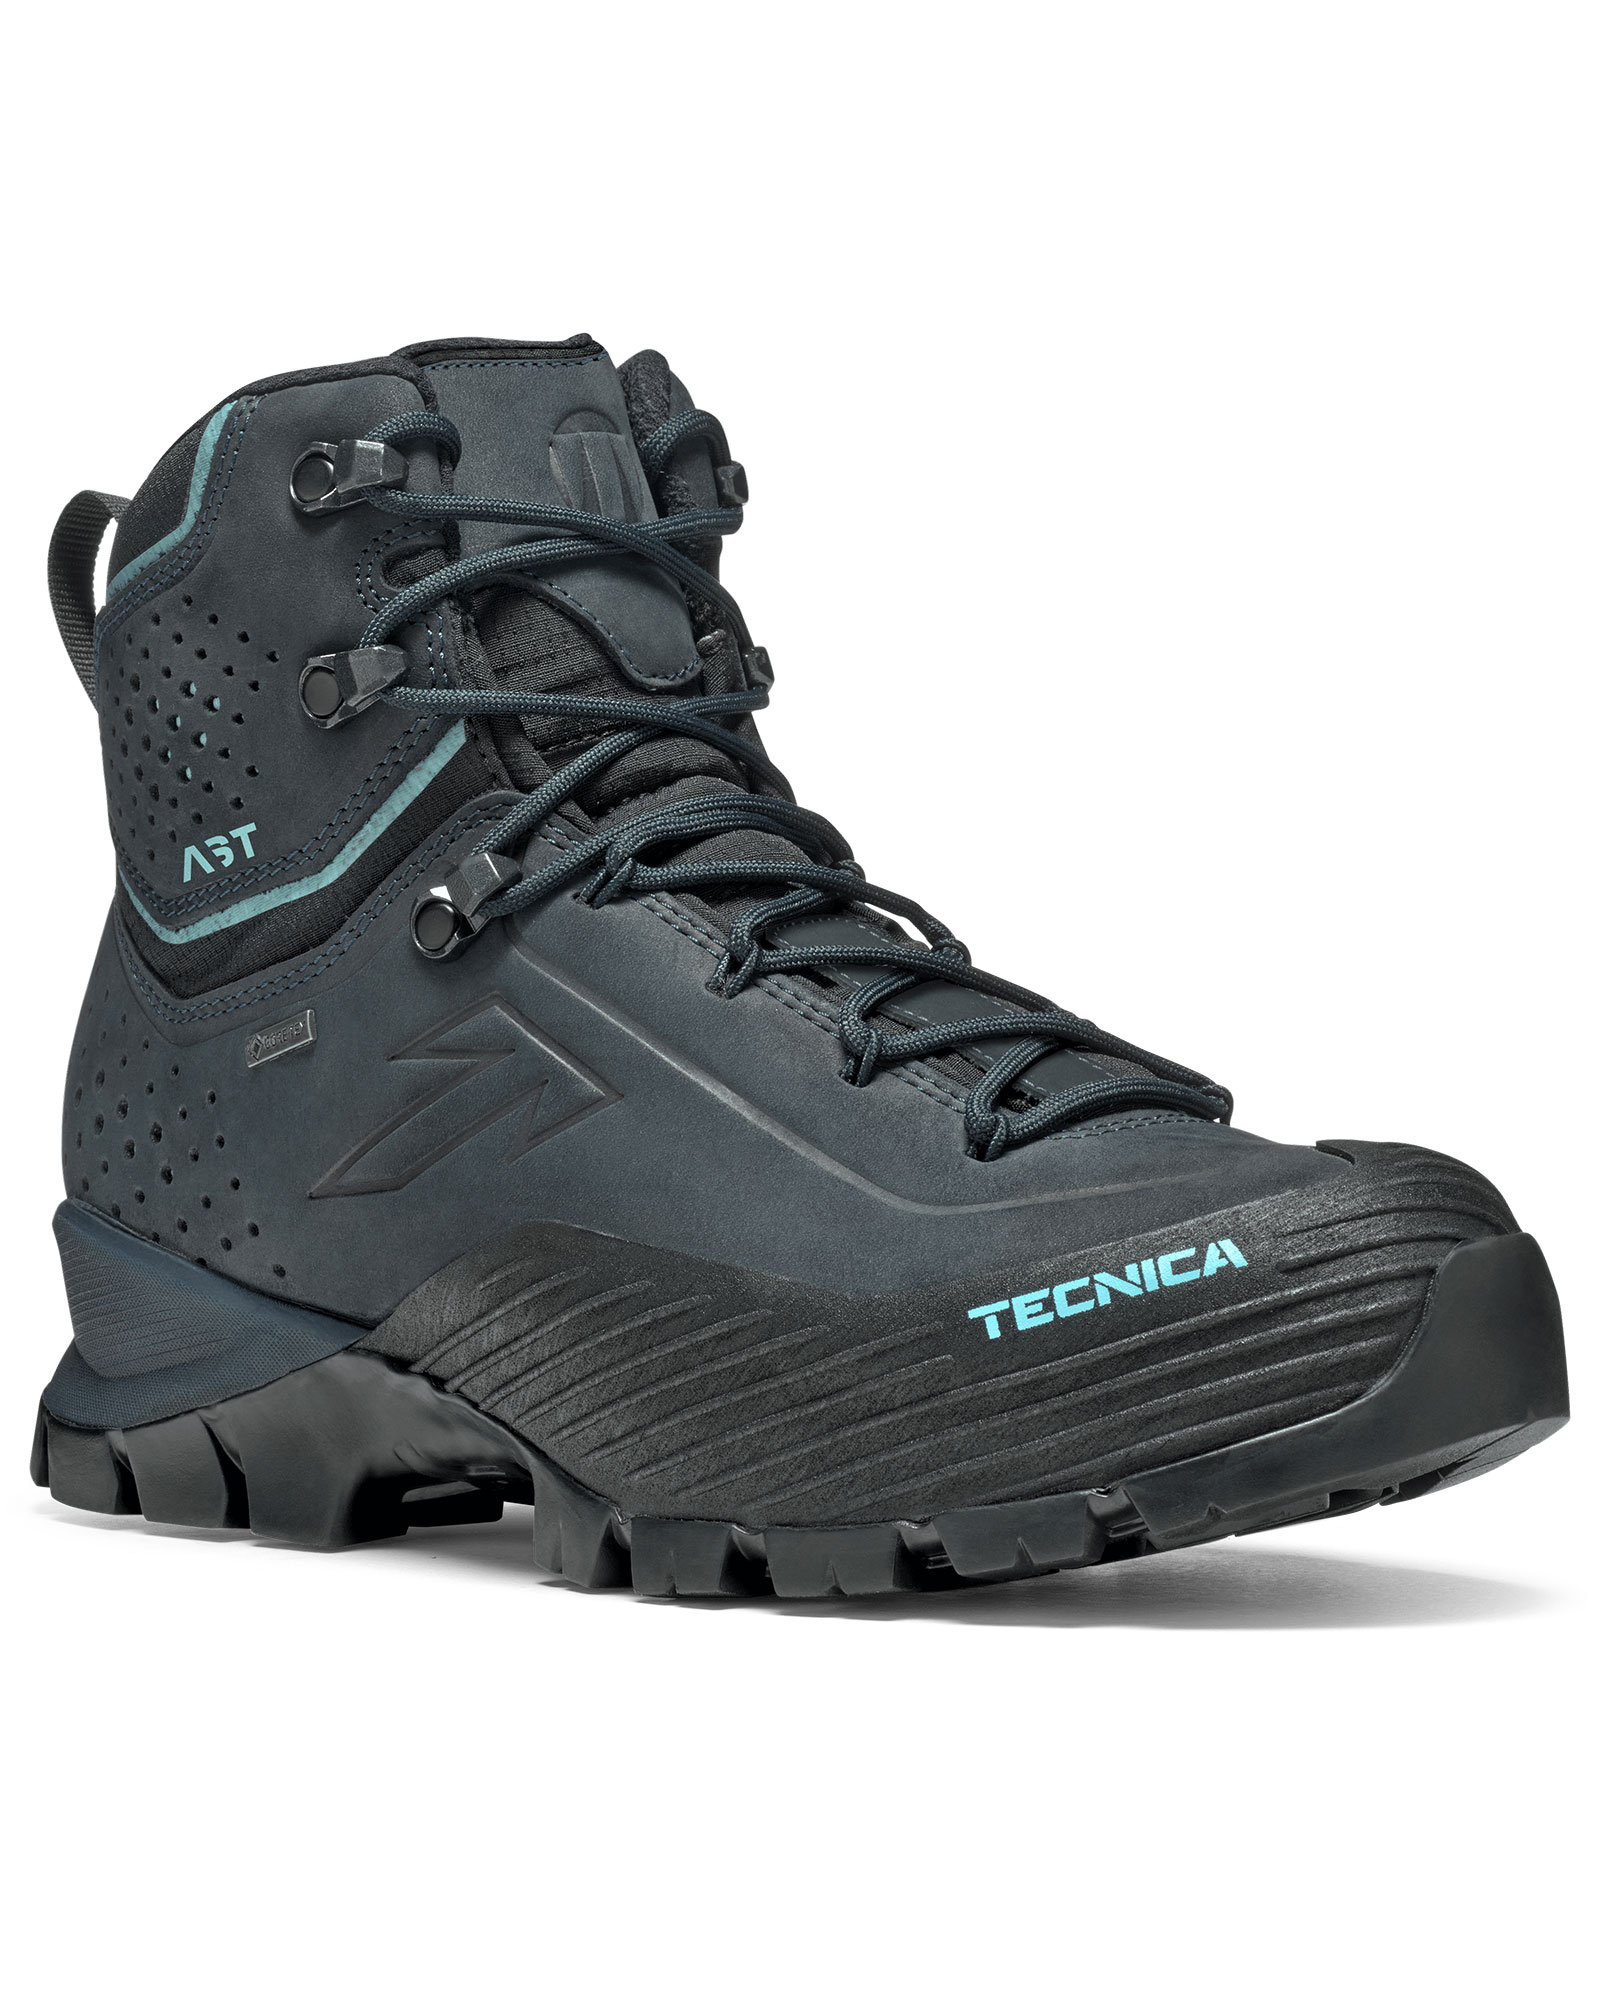 Tecnica Forge 2.0 GORE TEX Women’s Boots - Dark Avio/Light Blueness UK 5.5